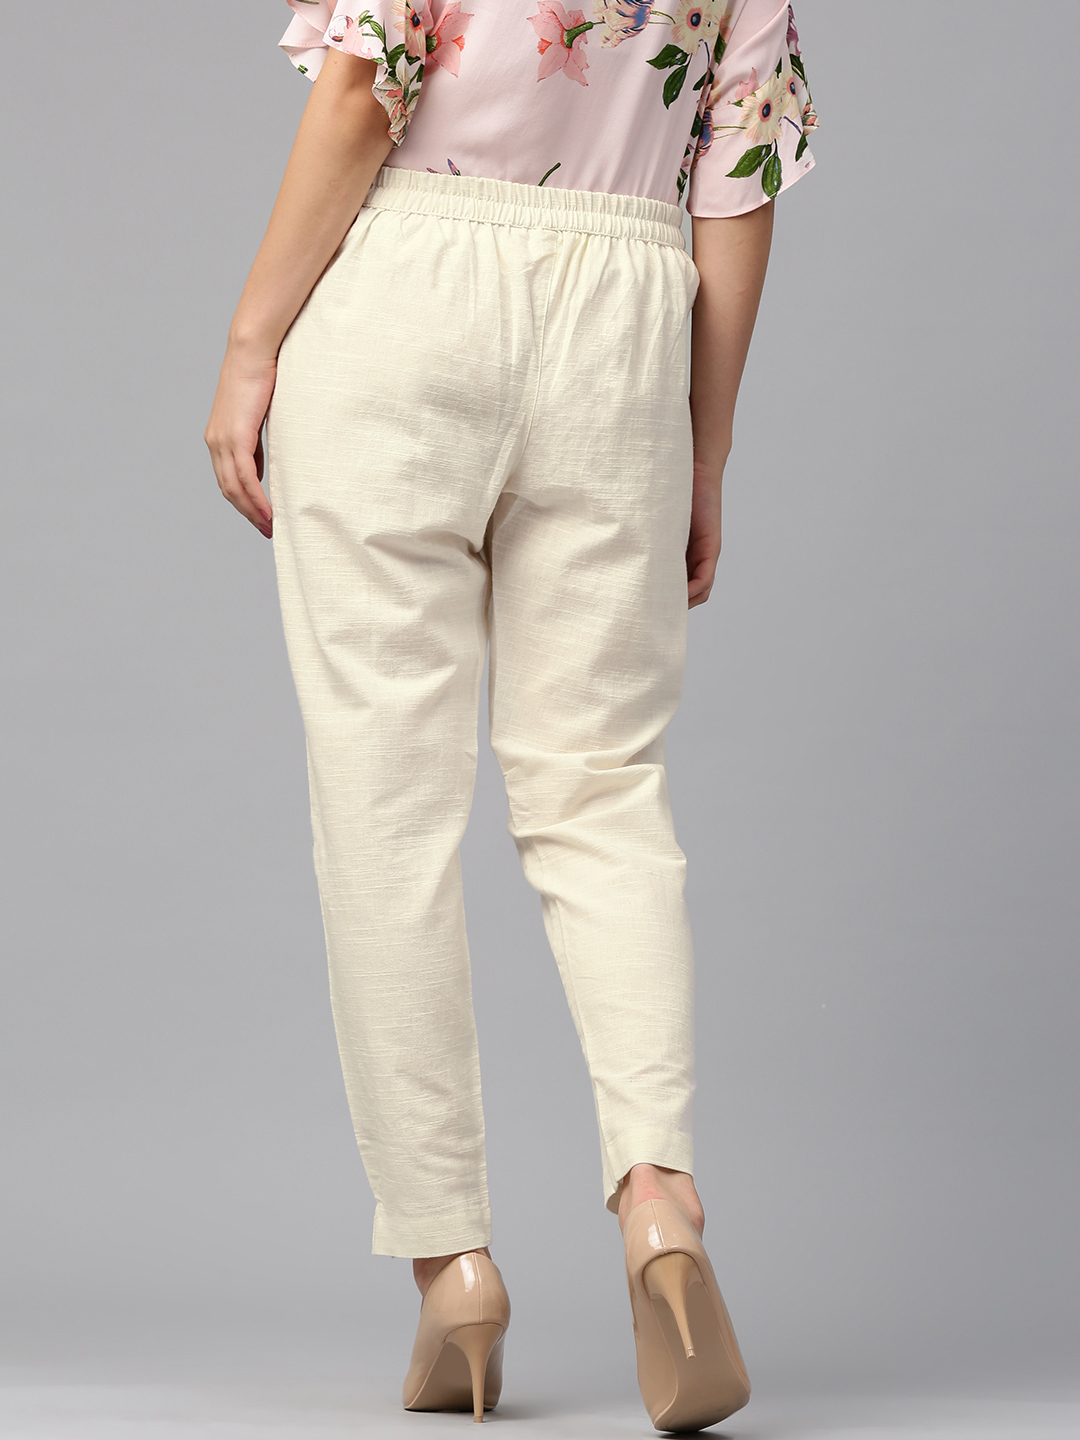 Buy EverDiva White Cotton fabric signature pants for formal/ casual ...